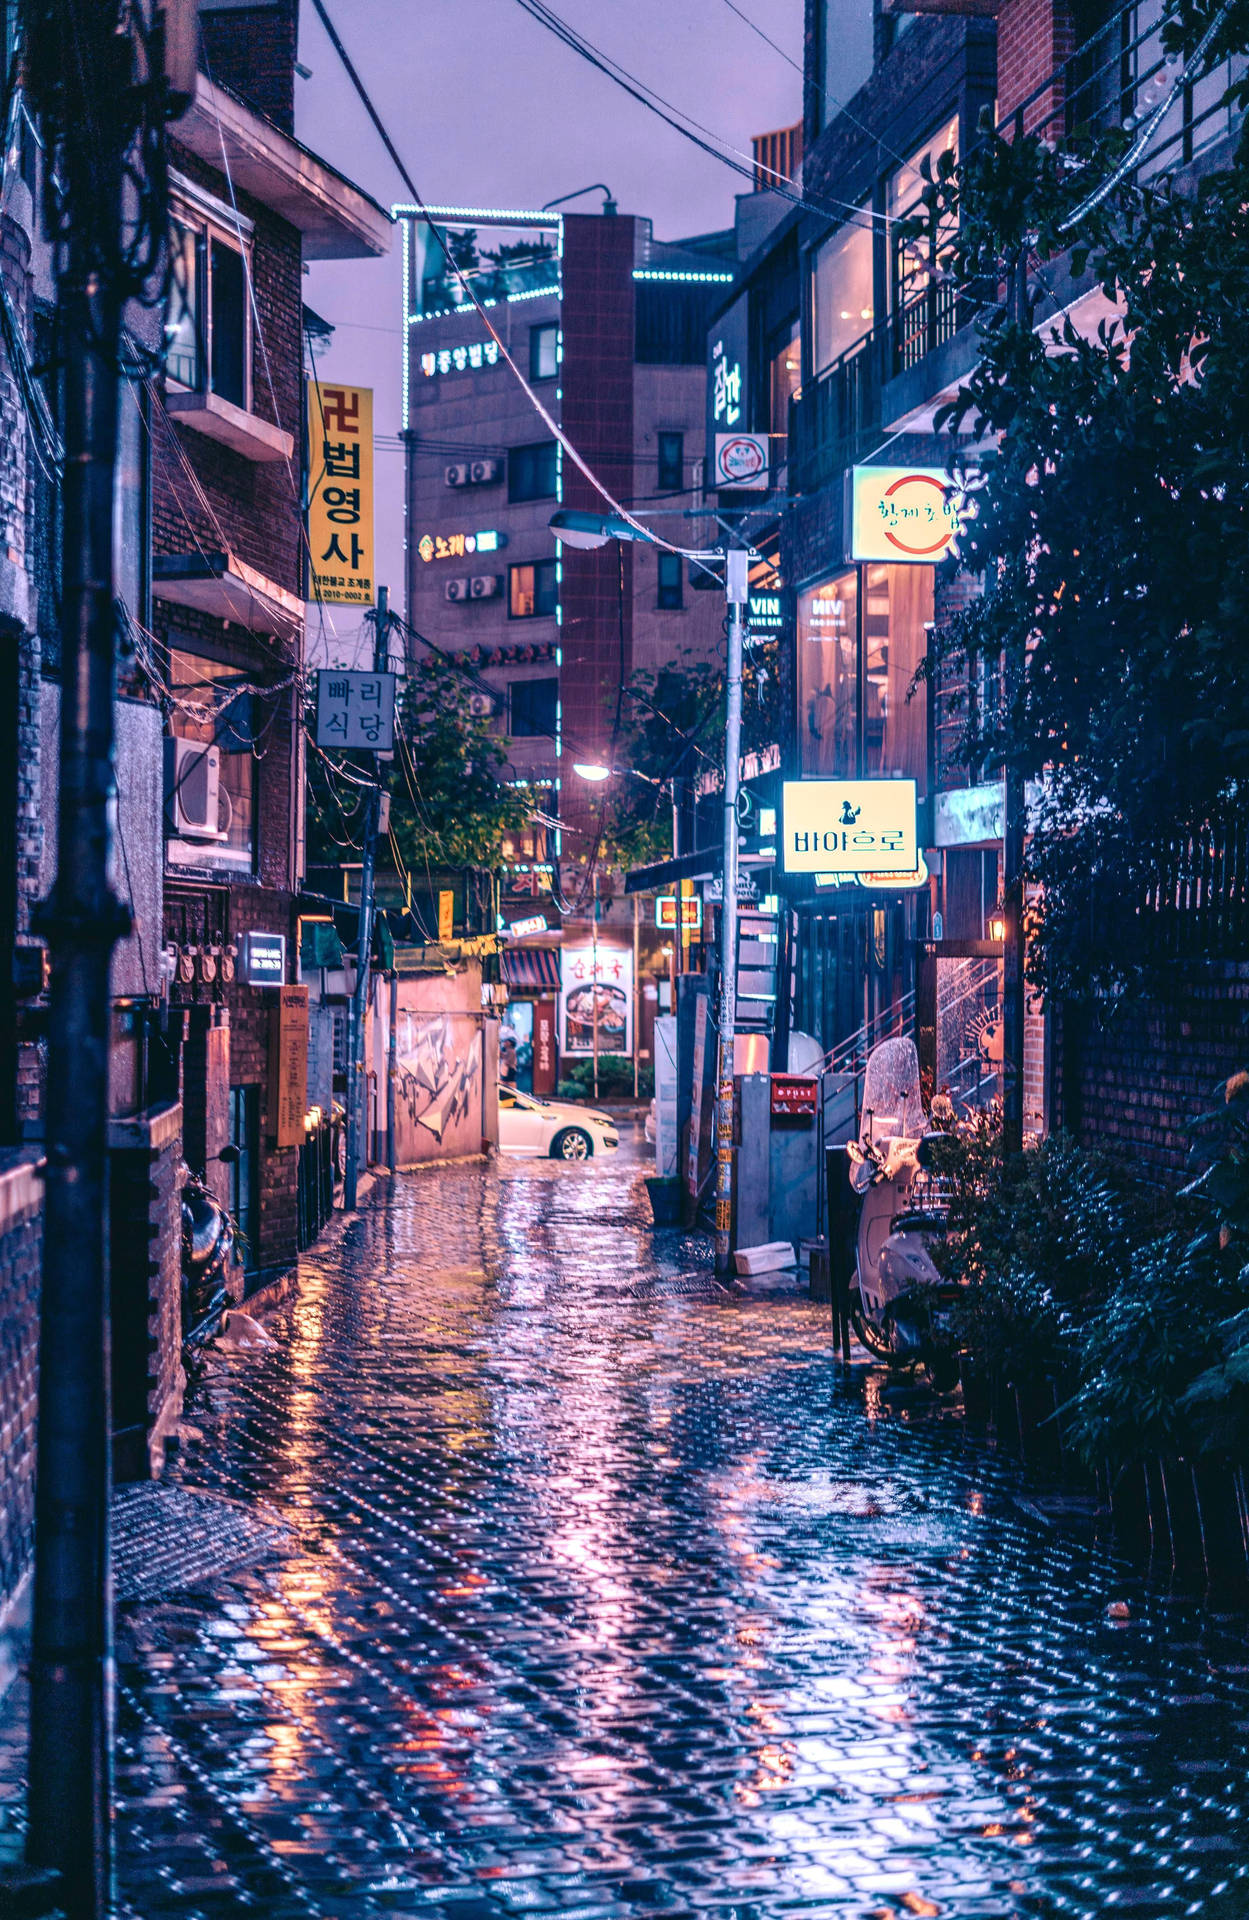 A Glimpse Of Serenity: Korean Aesthetic In A Wet Street Scene